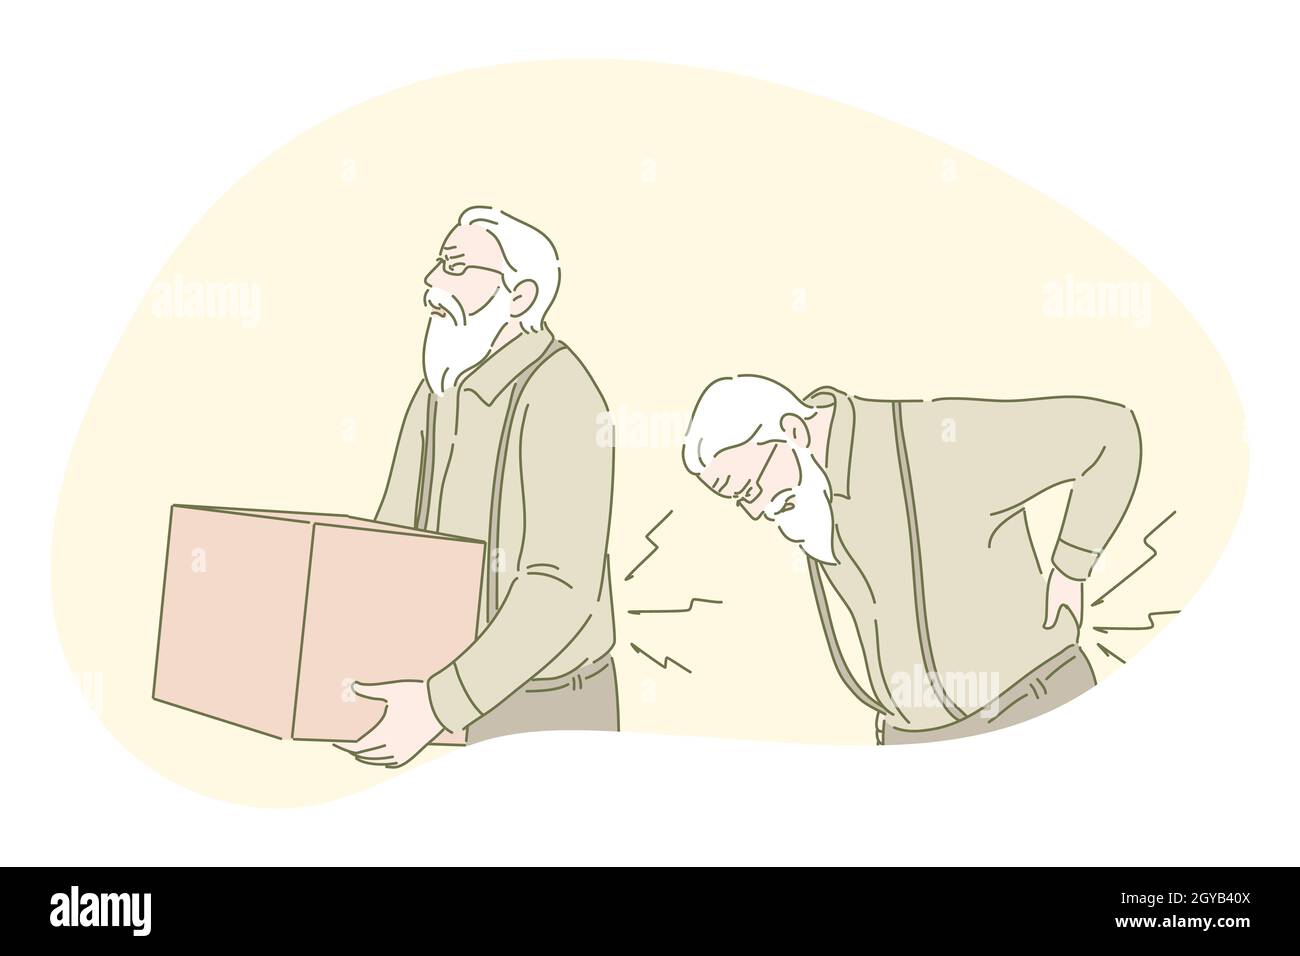 Rückenschmerzen, Rückenschmerzen, Rheuma, Osteoporose Konzept. Ältere reife Mann Cartoon-Figur trägt schwere Box und leiden unter starken Rückenschmerzen. Er Stockfoto